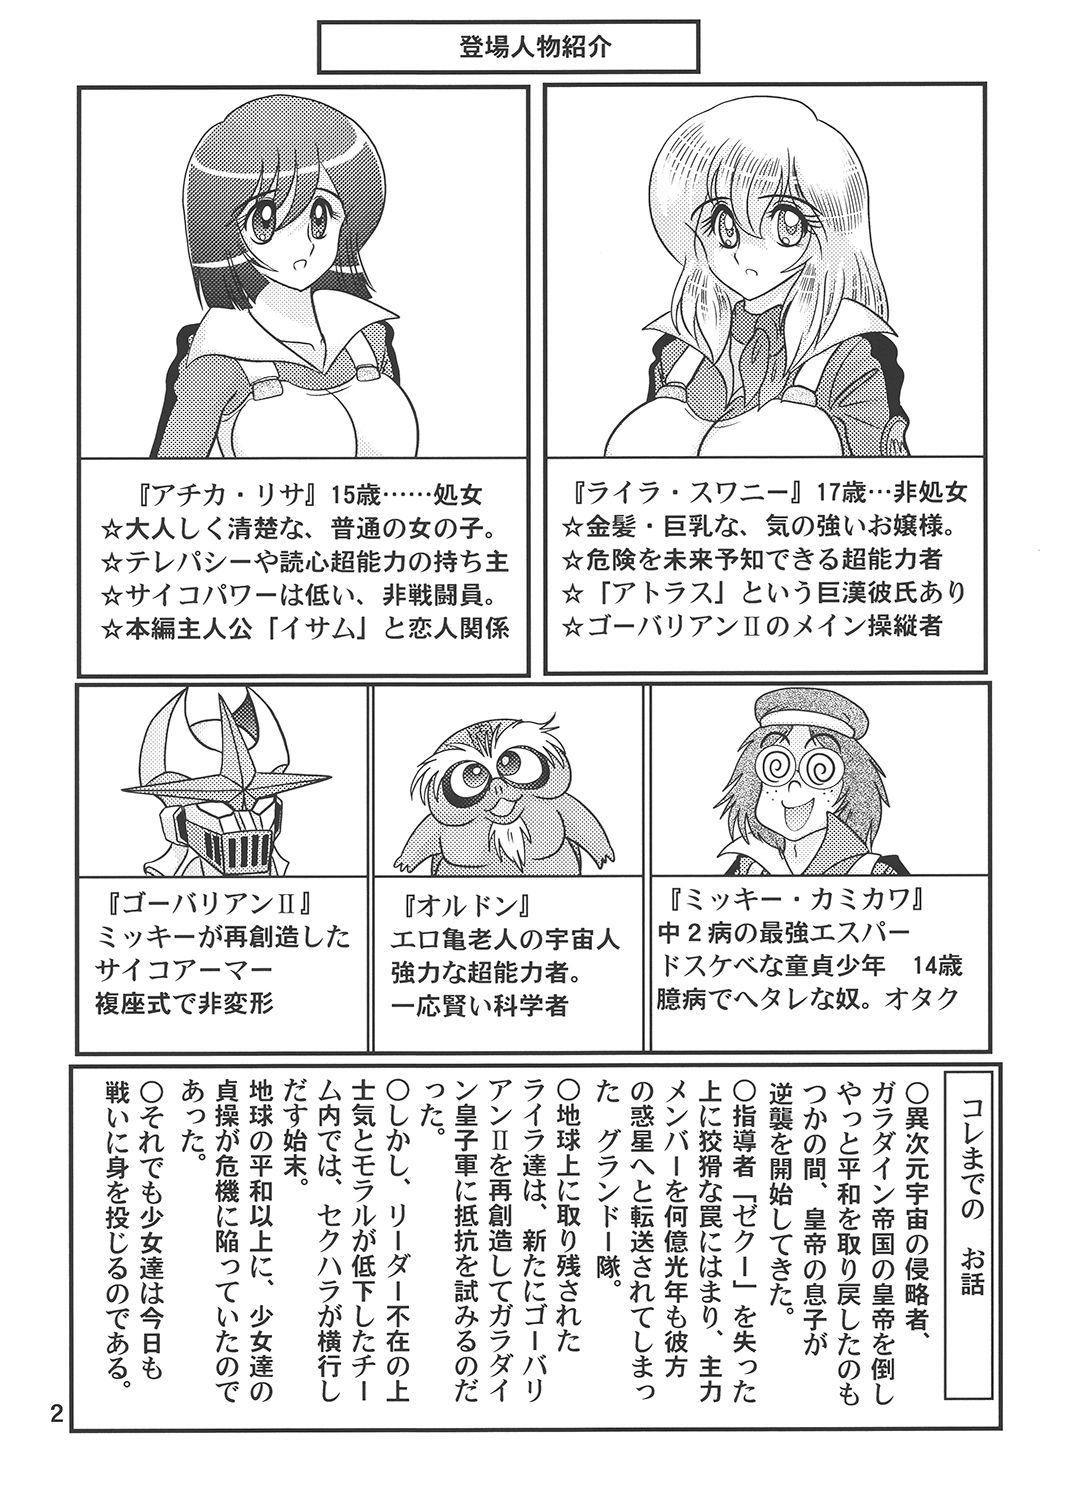 Friends Saiko Ama Gobarian 27 2 Hand - Page 3